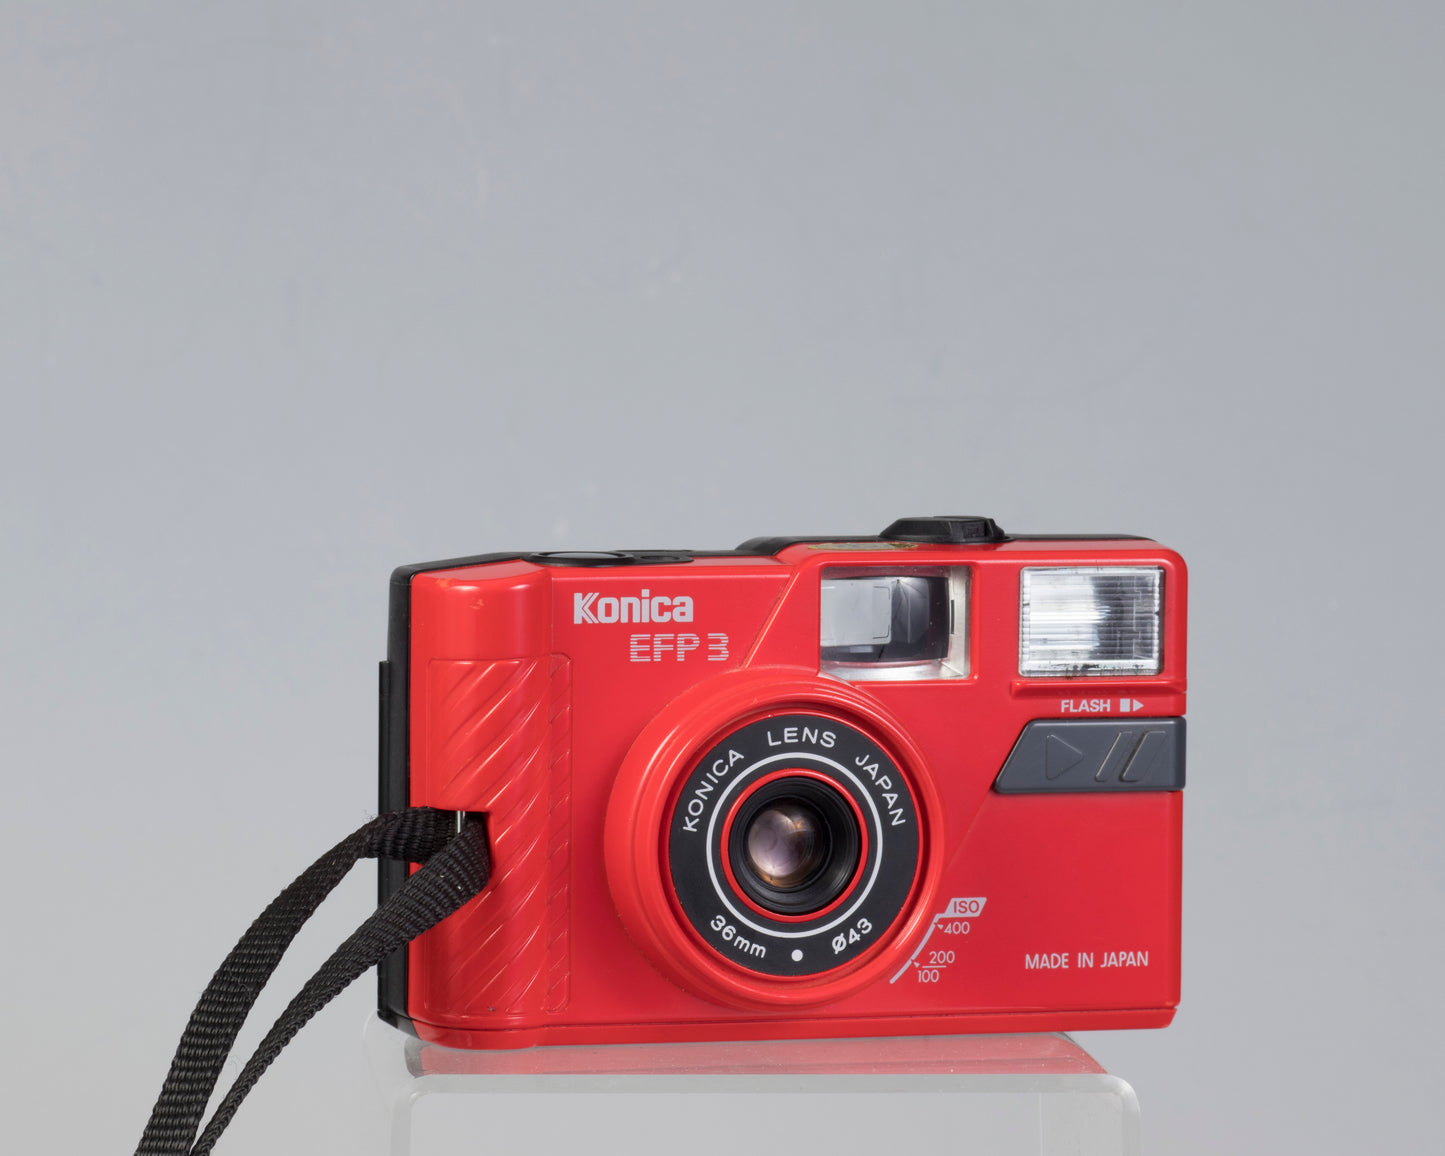 The Konica EFP-3 compact 35mm film camera